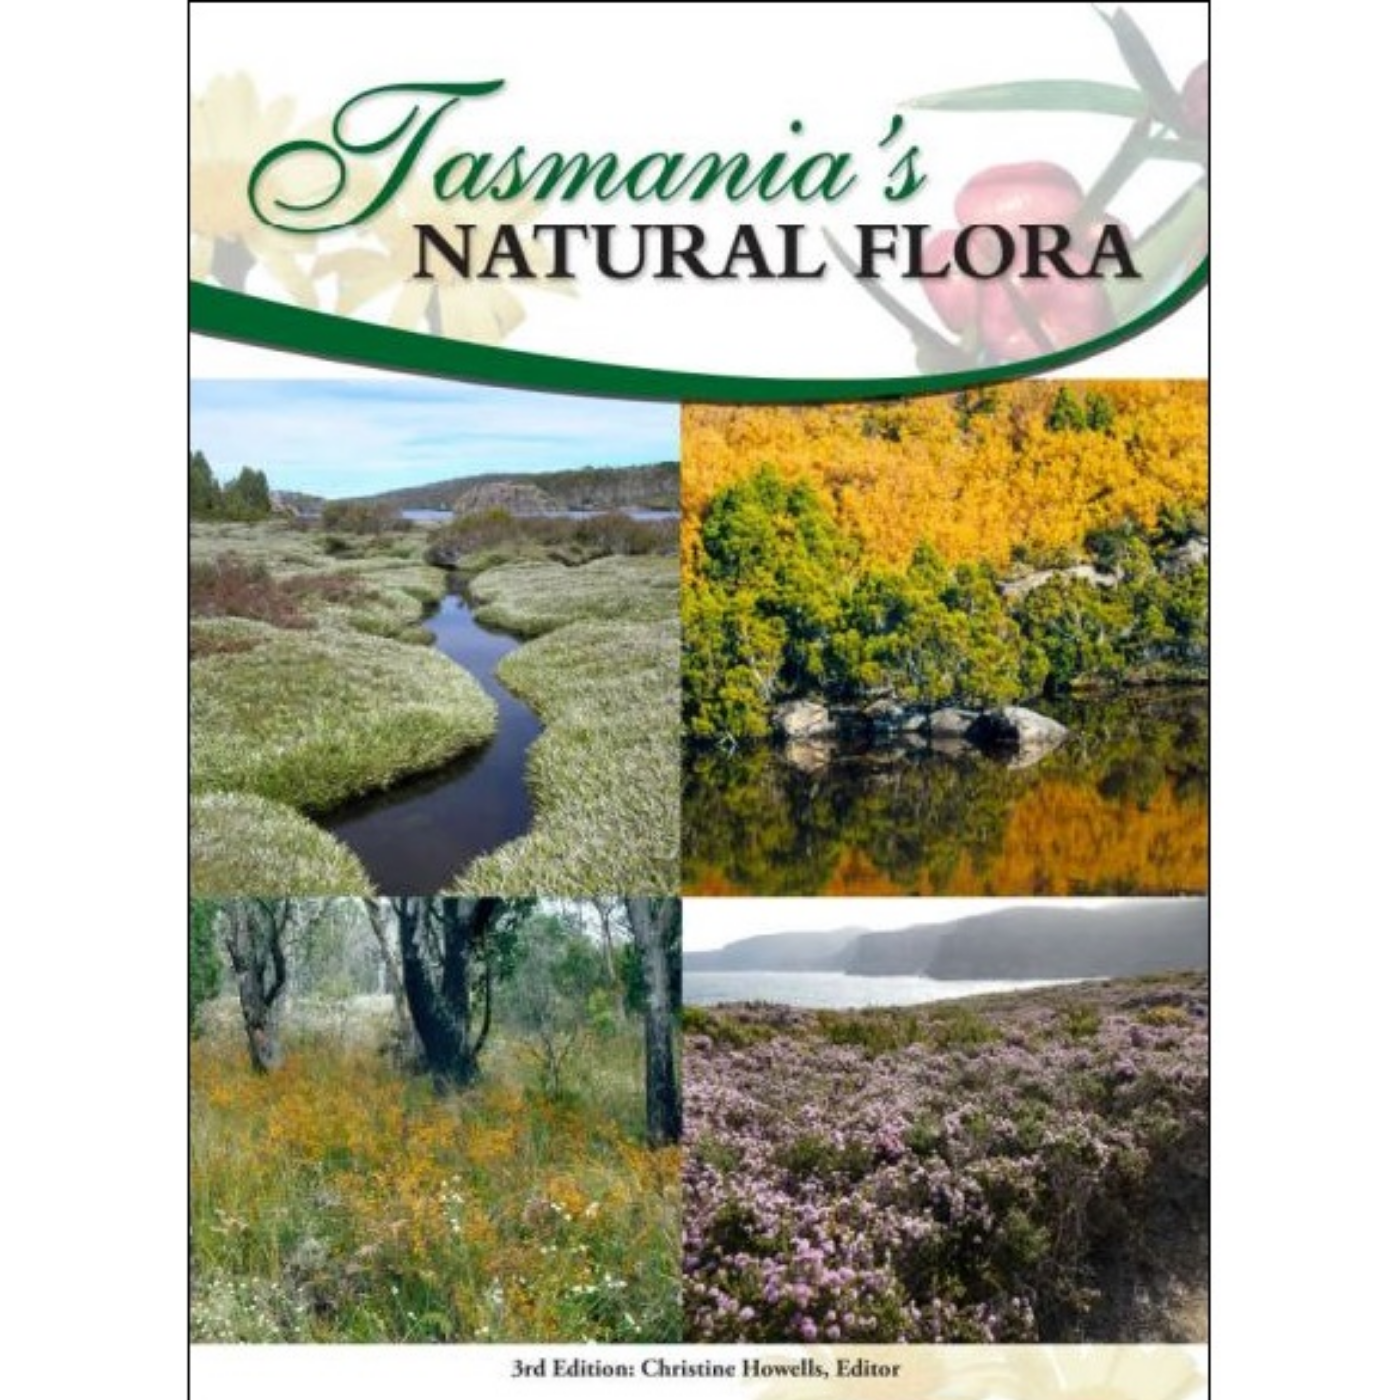 Tasmania's Natural Flora - Third Edition